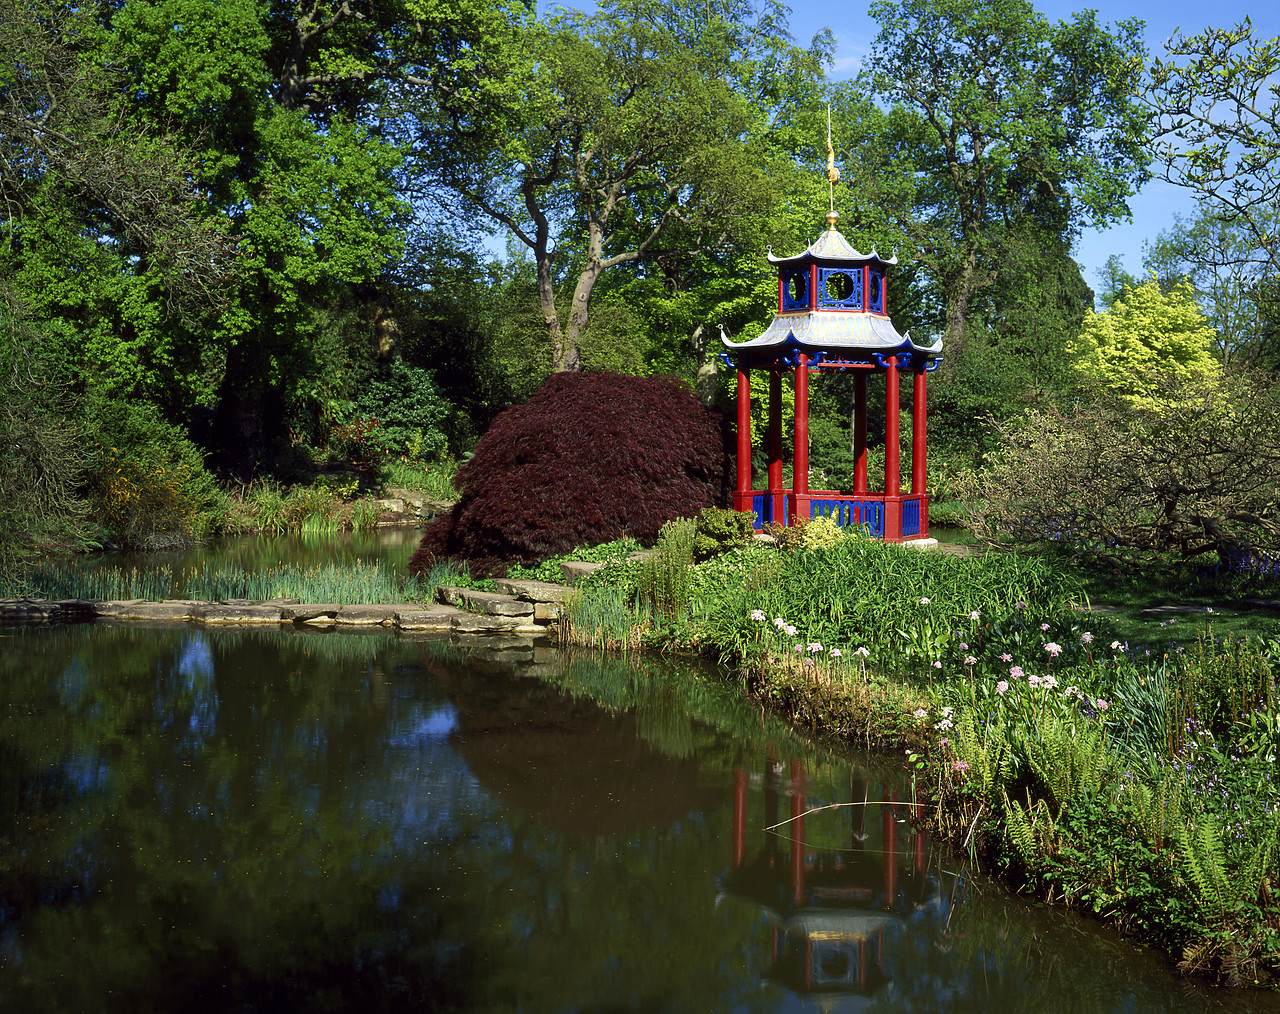 #050140-2 - Pagoda in Water Garden at Cliveden, Taplow, Buckinghamshire, England